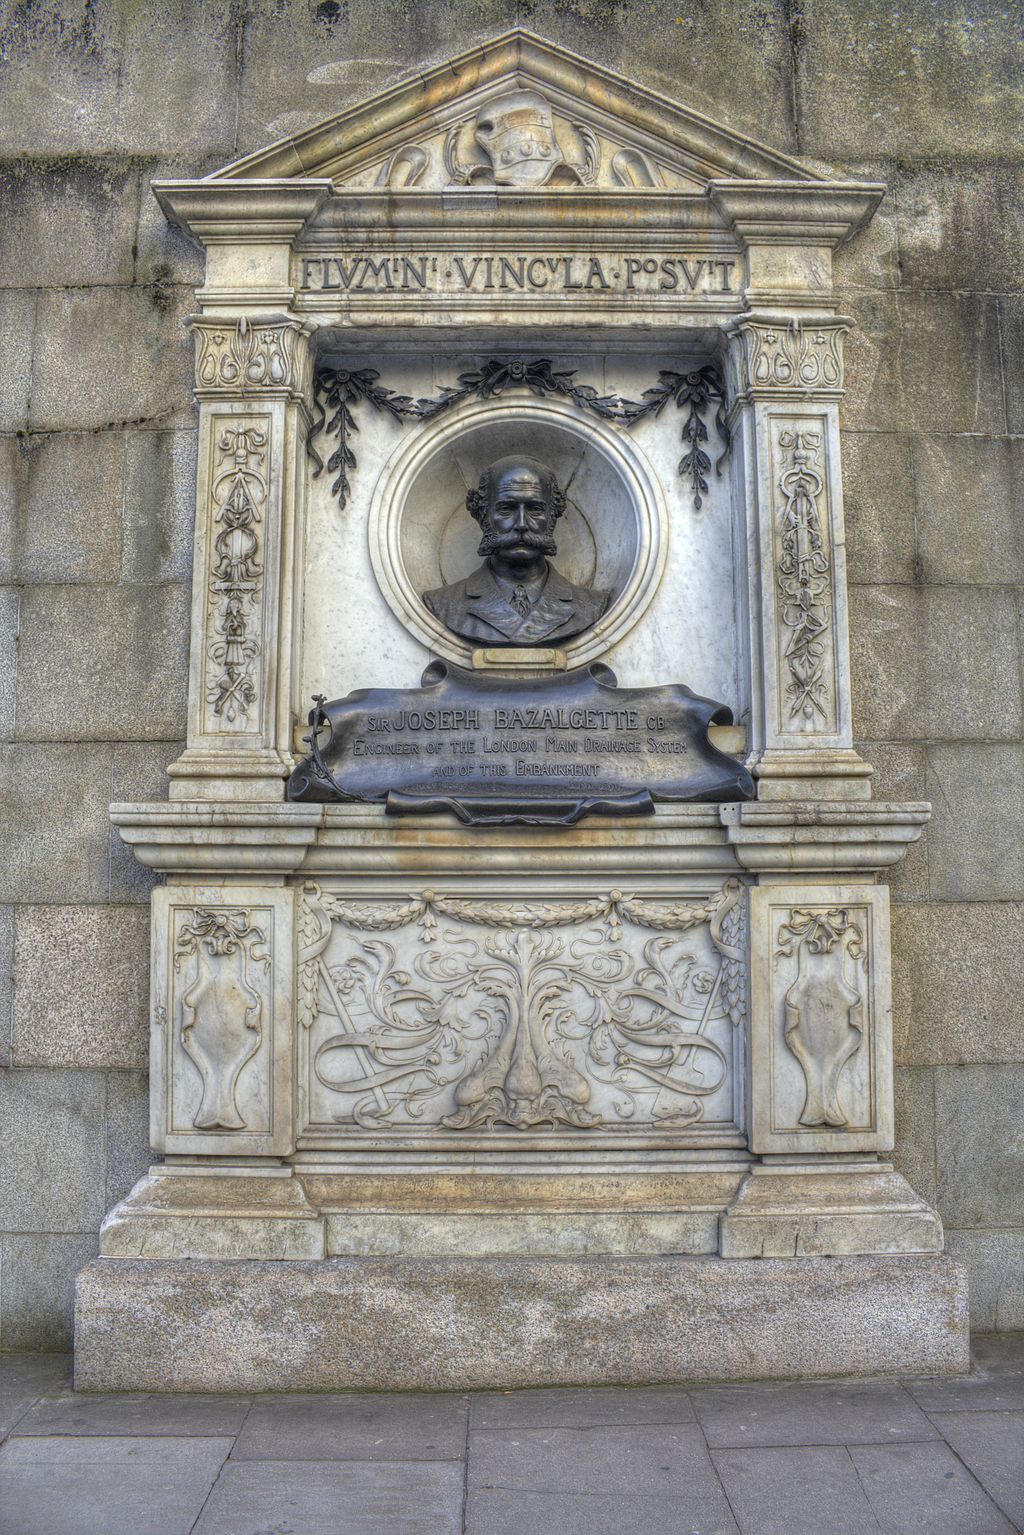 Joseph Bazalgette Memorial, Victoria Embankment in London. Photo Credit: © Prioryman via Wikimedia Commons.